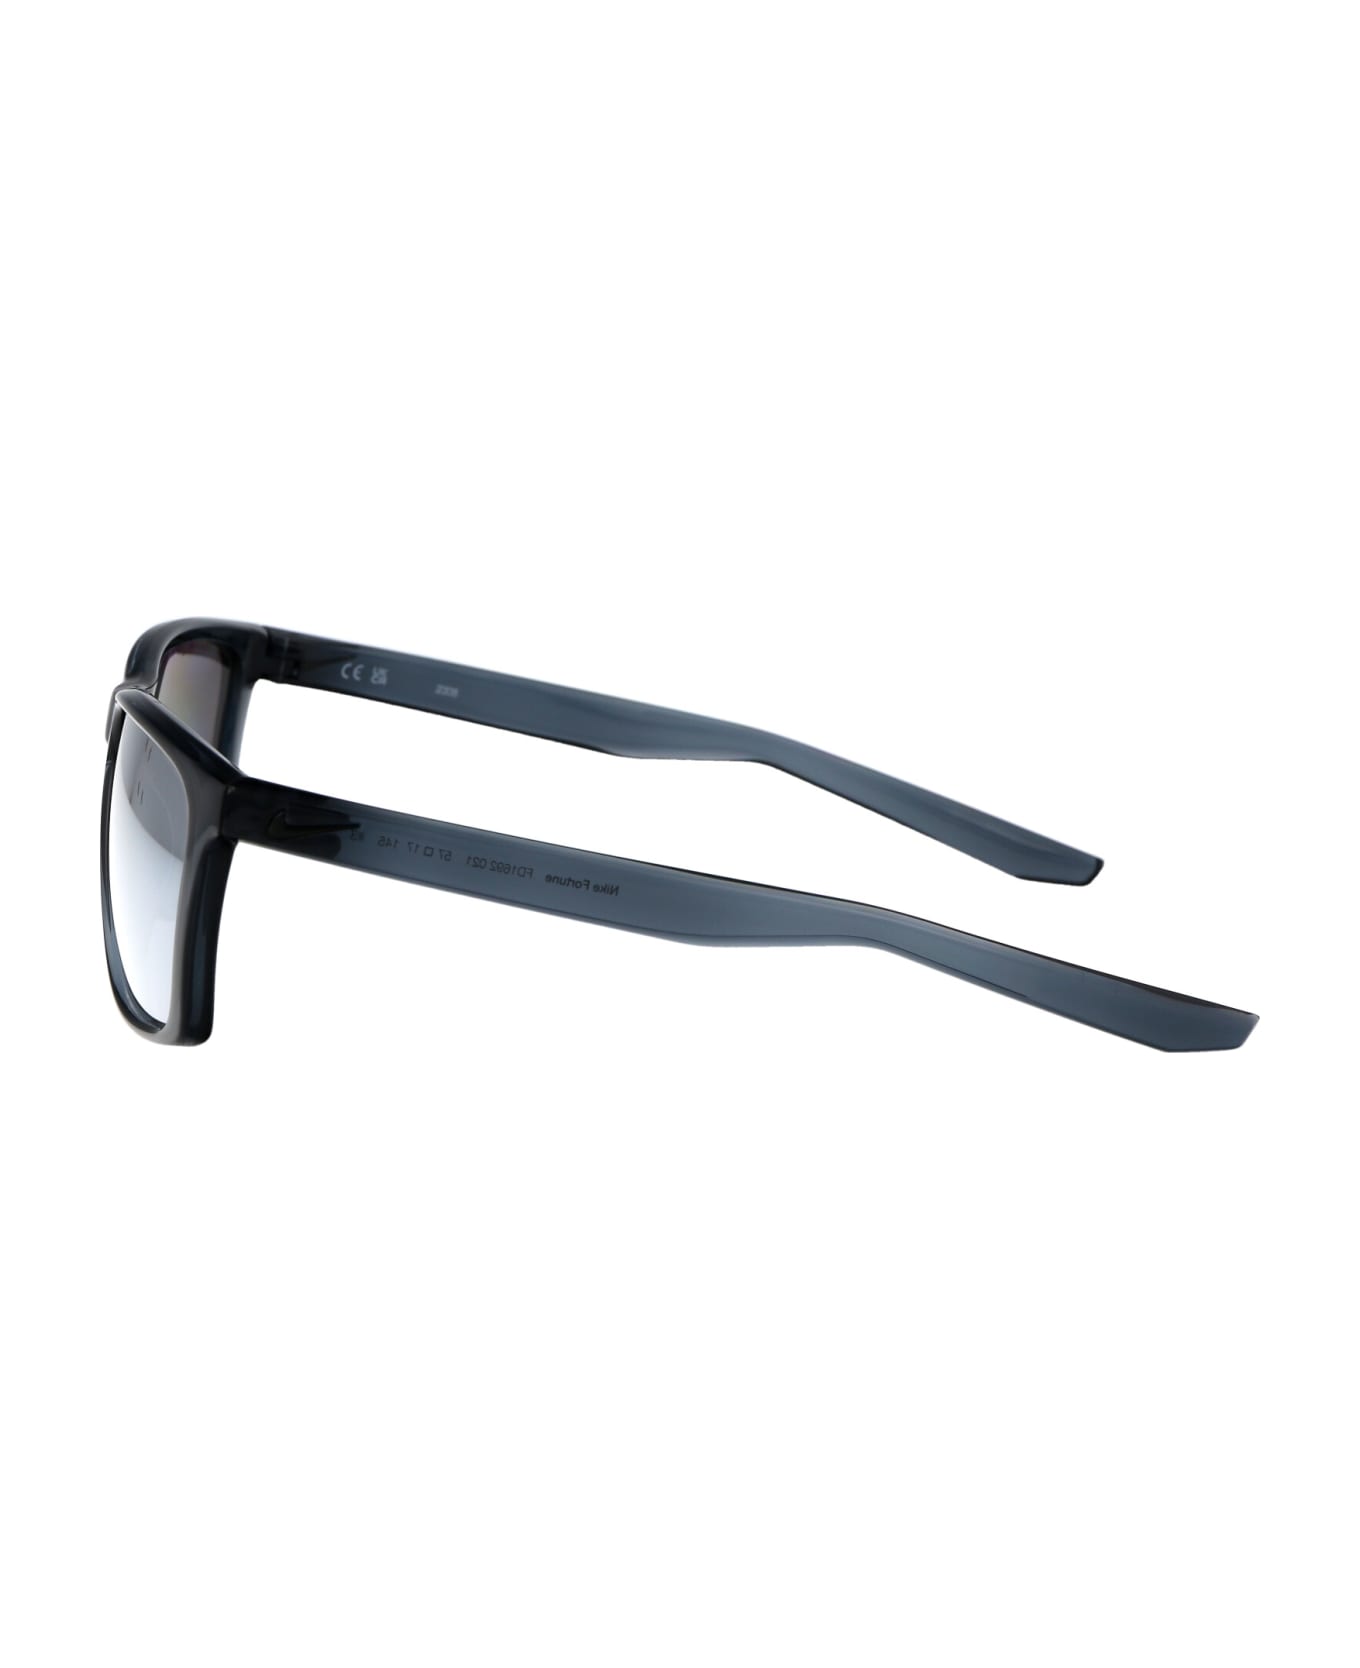 Nike Fortune Sunglasses - 021 DARK GREY GRIS FONCE